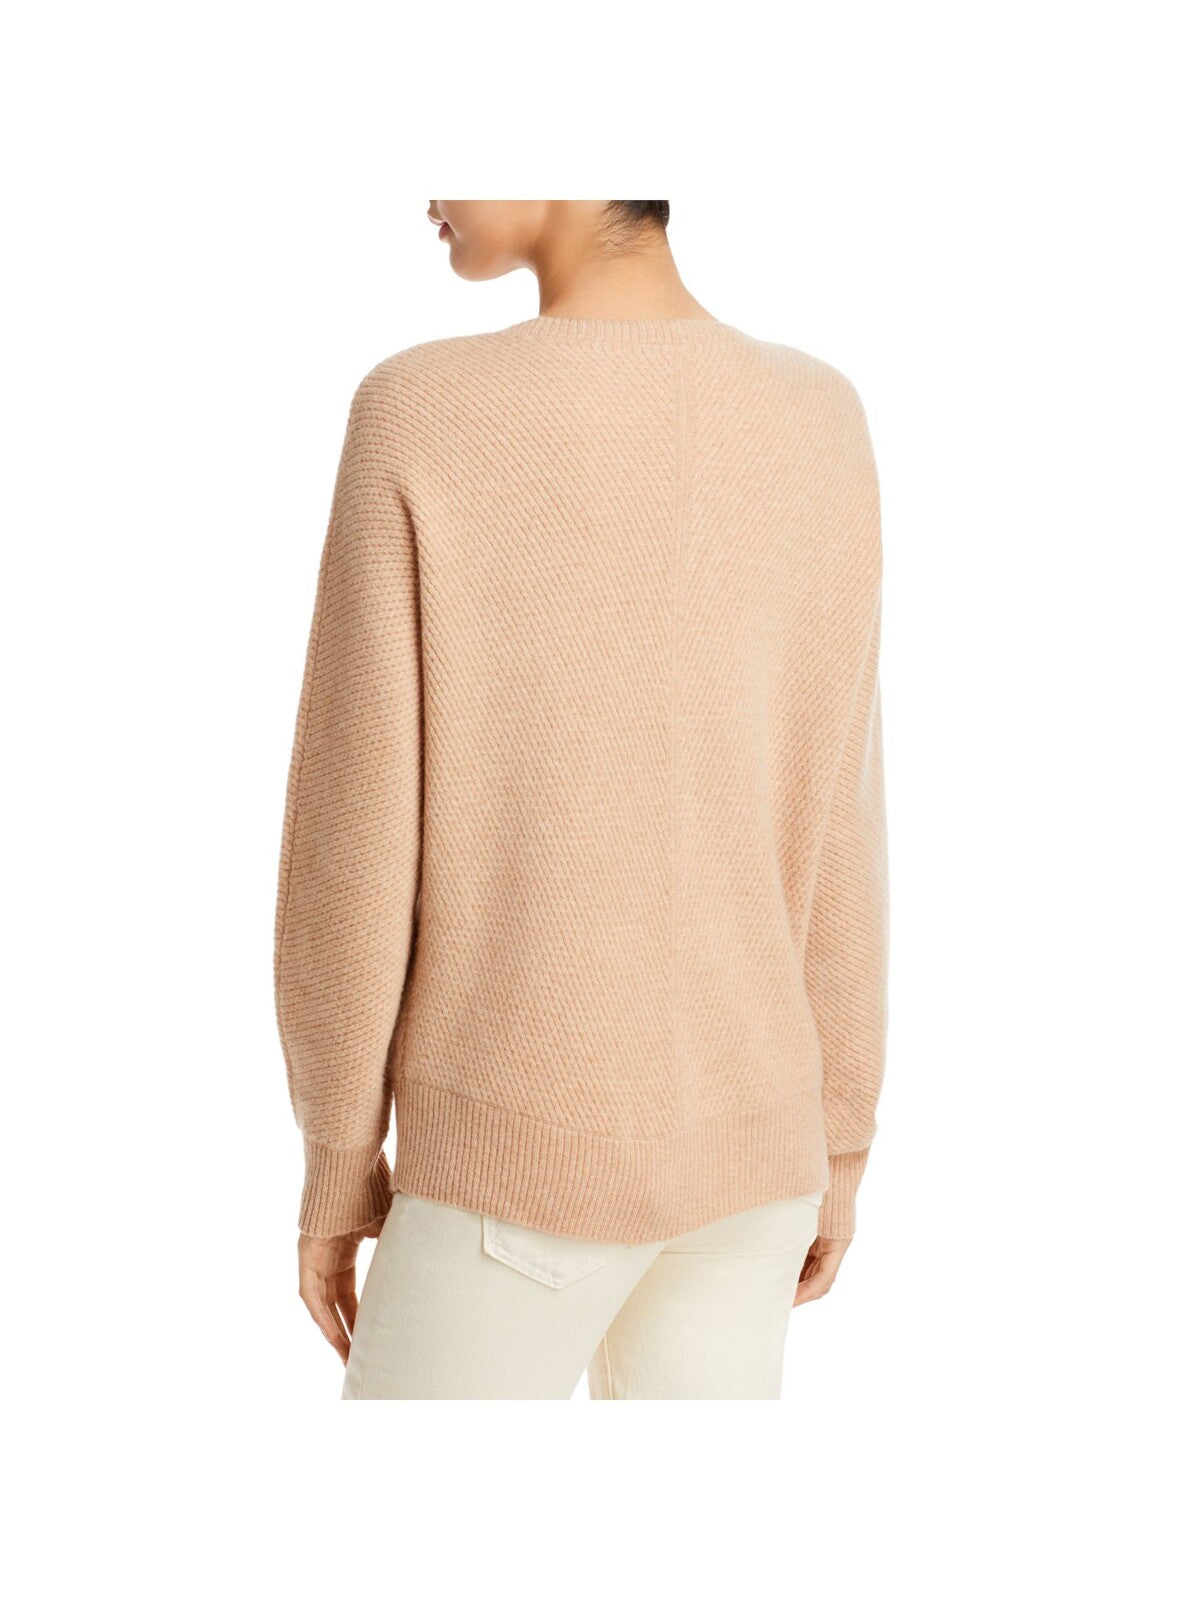 Designer Brand Womens Beige Ribbed Novelty Stitch Long Sleeve Scoop Neck Sweater XS